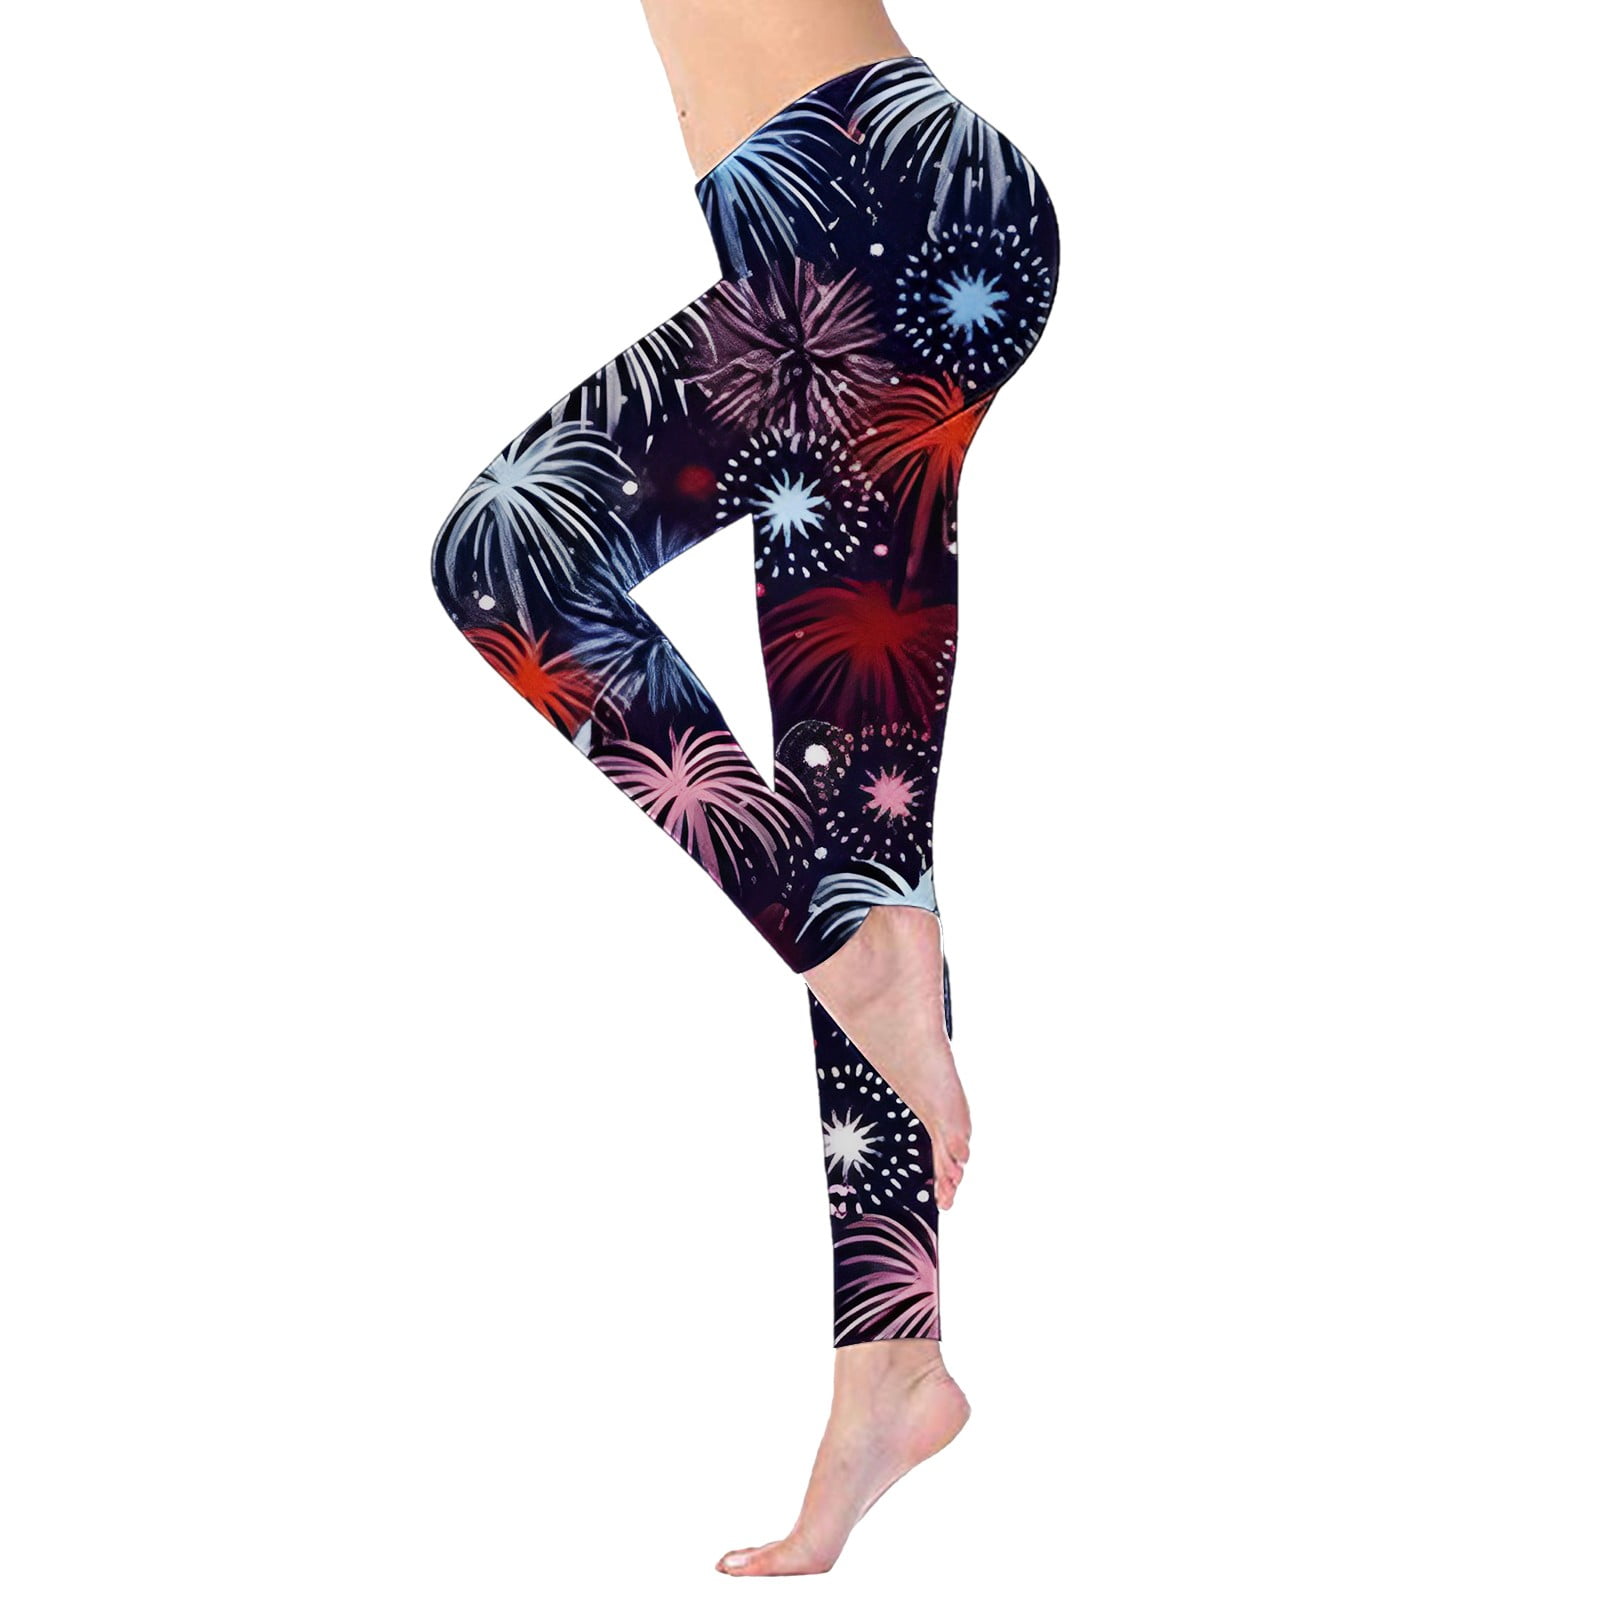 adviicd Yoga Pants For Women Casual Summer Yoga Women's Workout Yoga  Running Dance Gym pants High Waist Cheerleader Volleyball long Pants Pink  3XL 